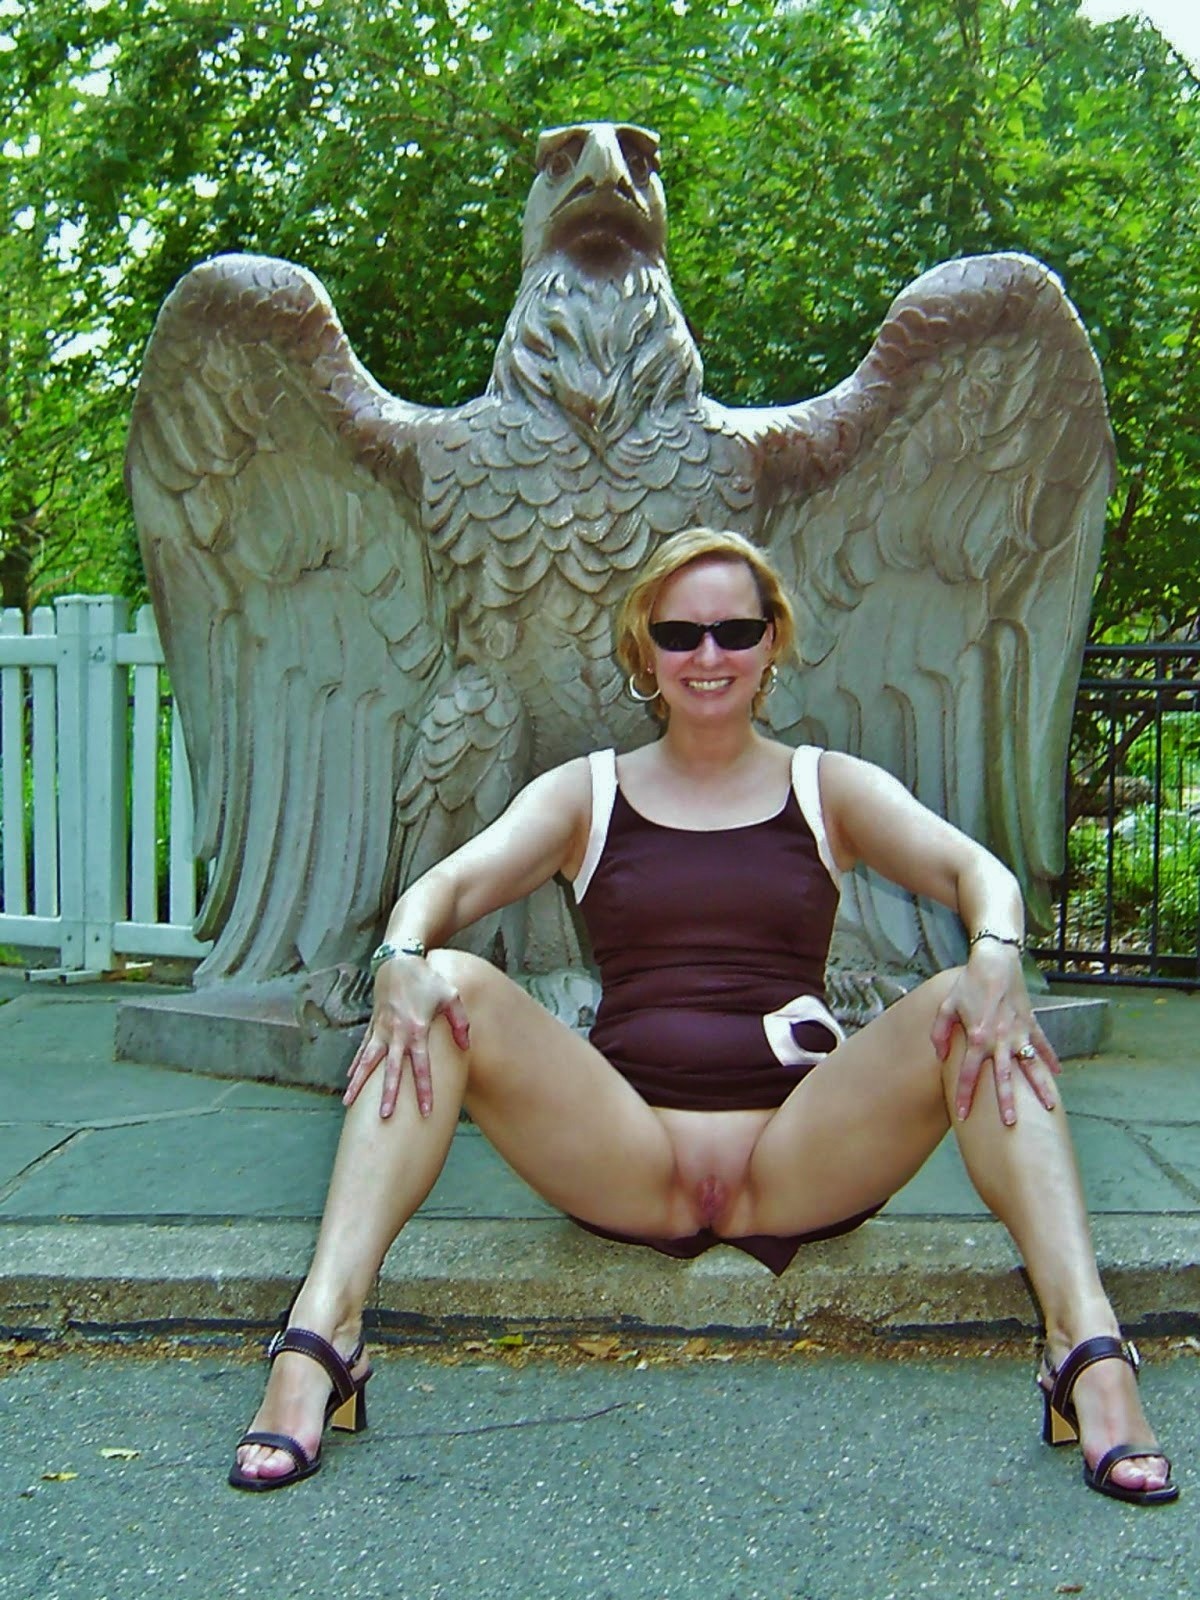 Skinny girl nude spread eagle